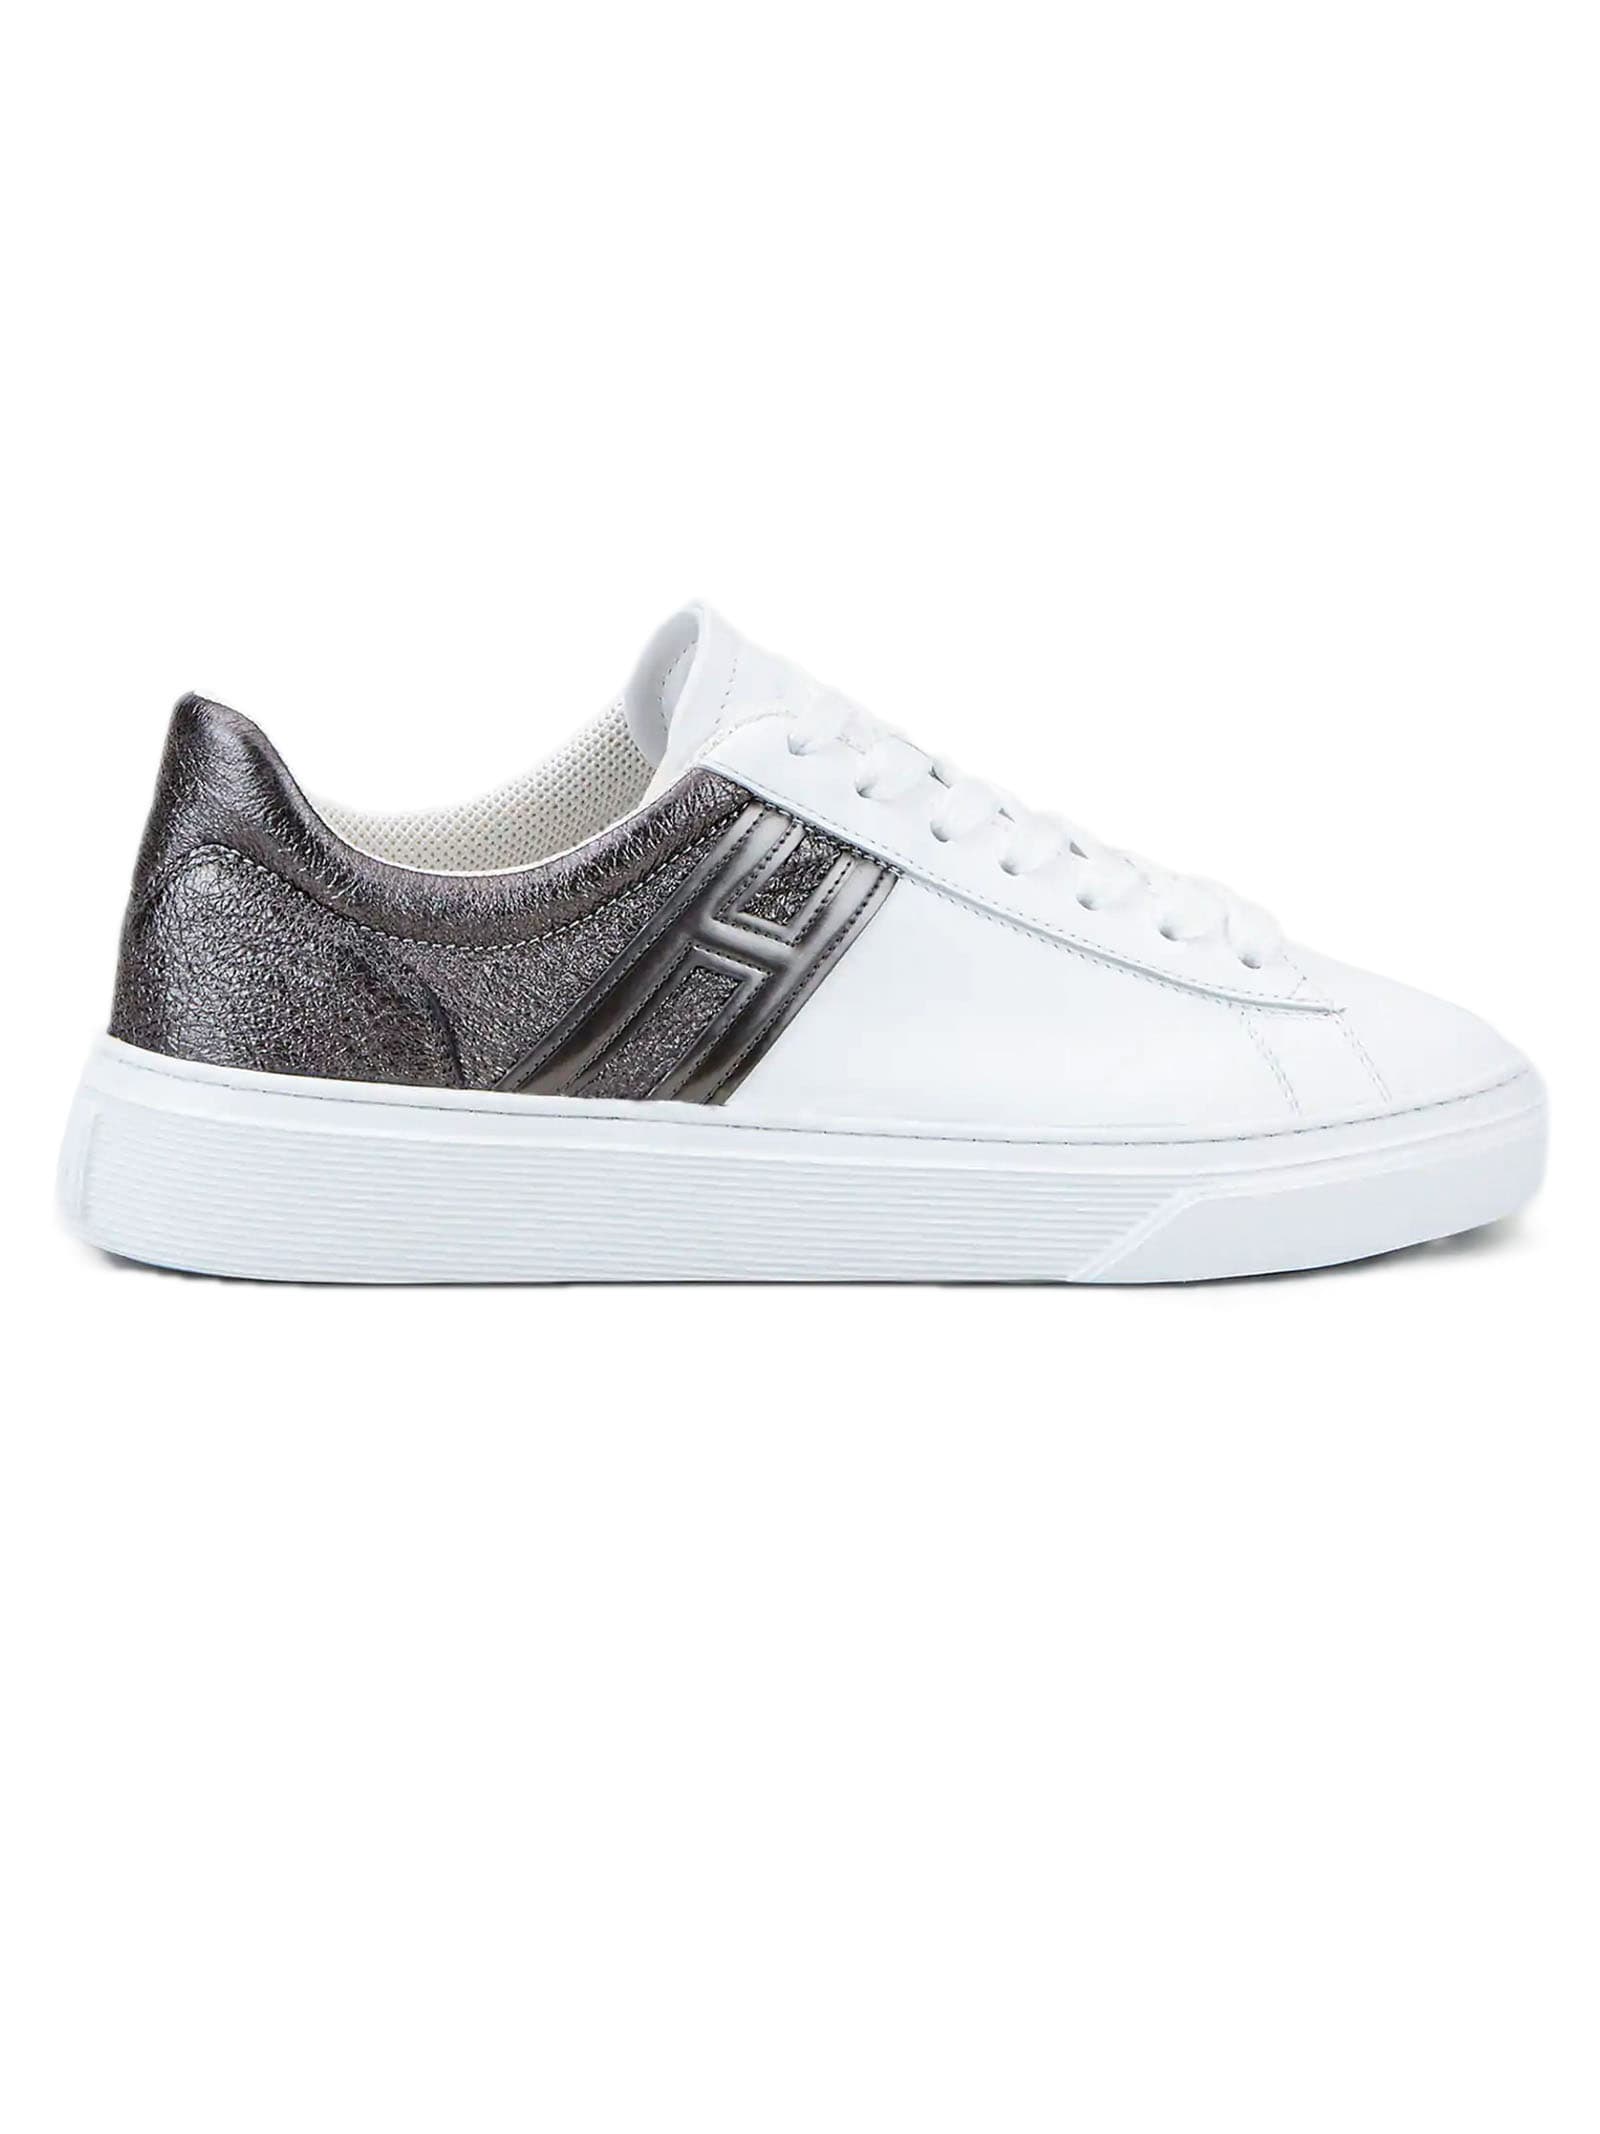 Hogan Sneakers H365 White, Black